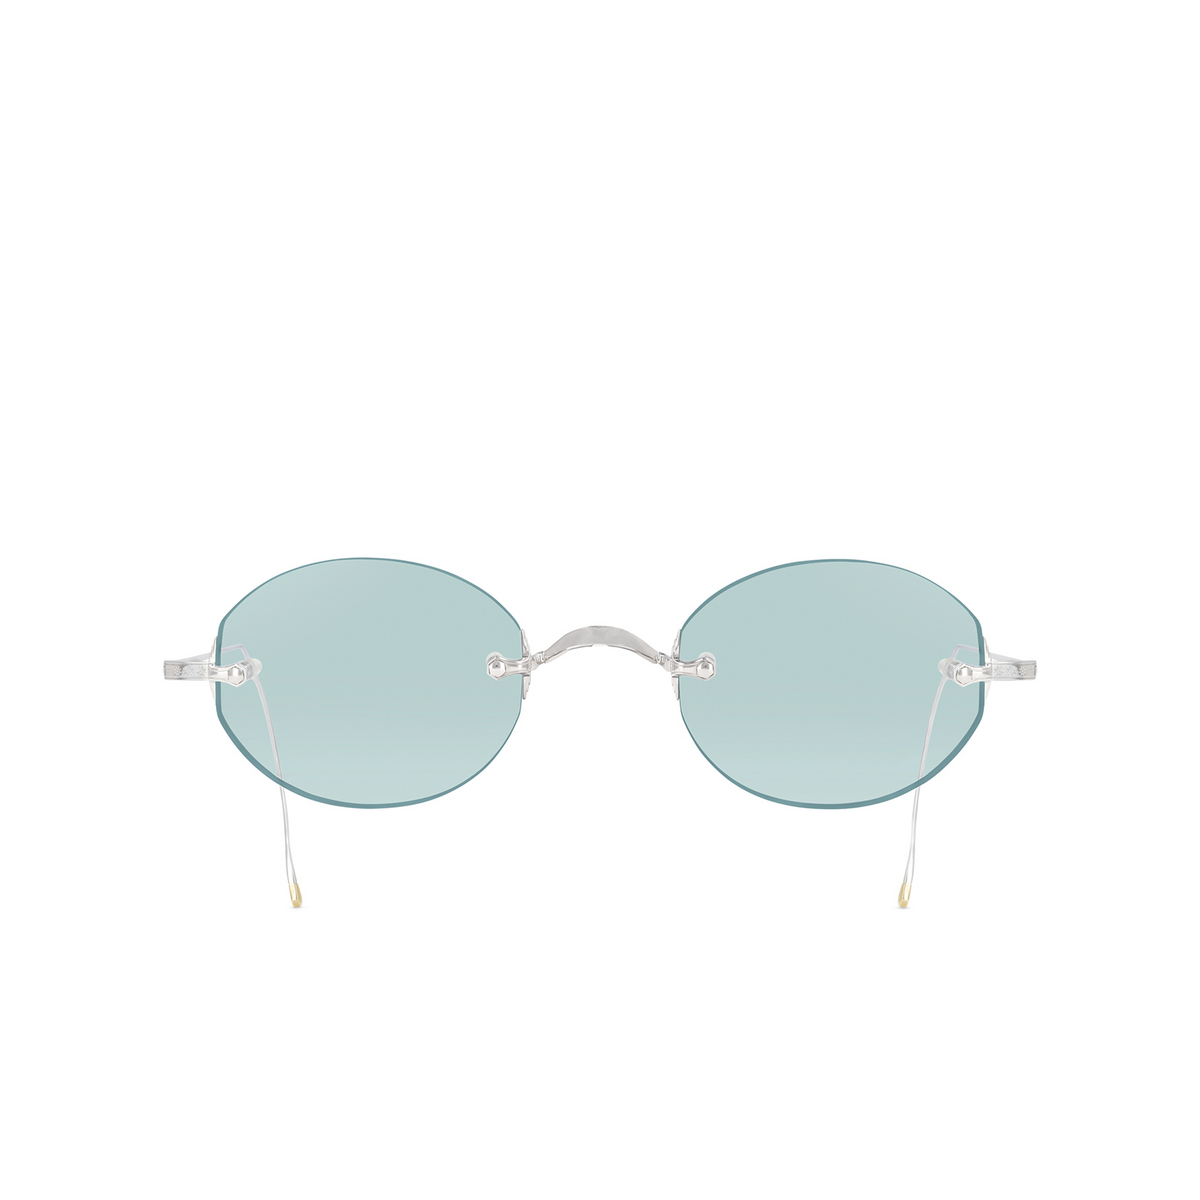 Mr. Leight MAKENA S Sunglasses PLT/GRNWSH Platinum - front view